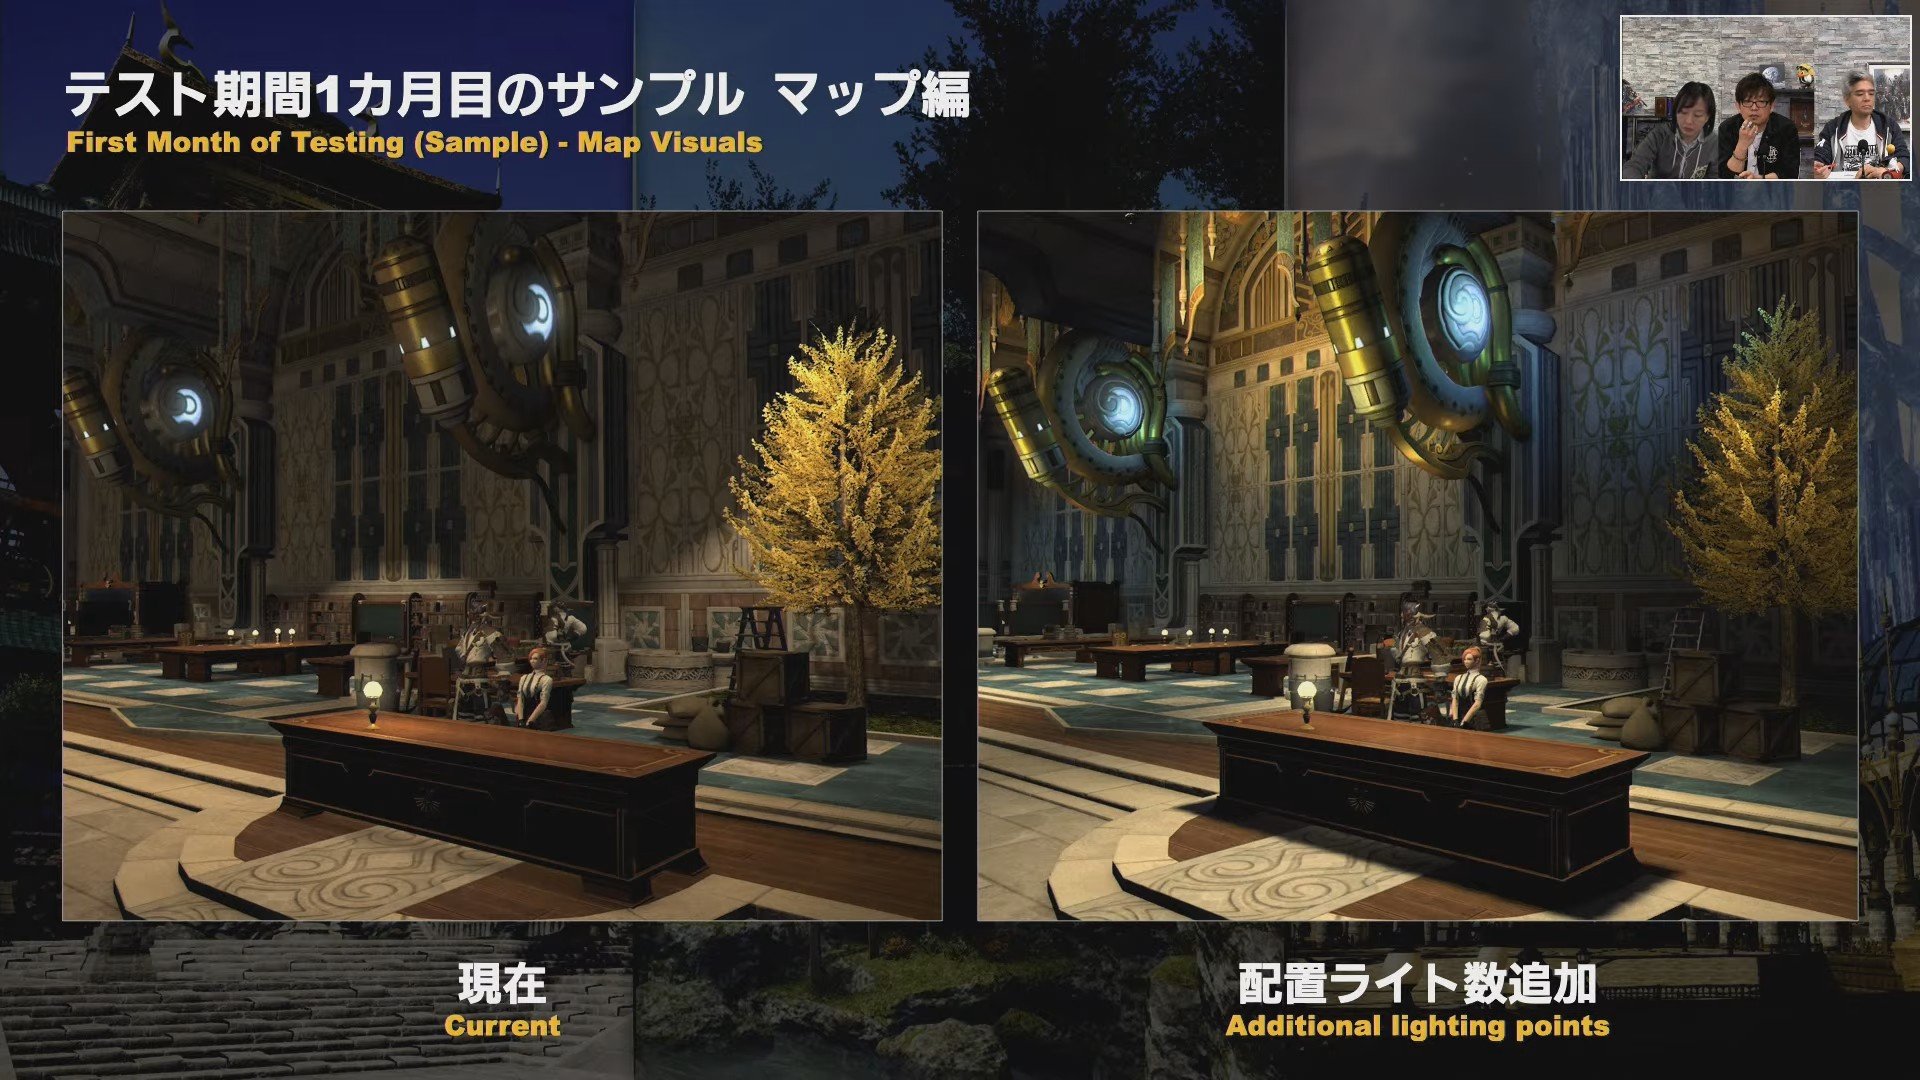 Final Fantasy XIV Gets Massive Overhaul, PS3 In 2013